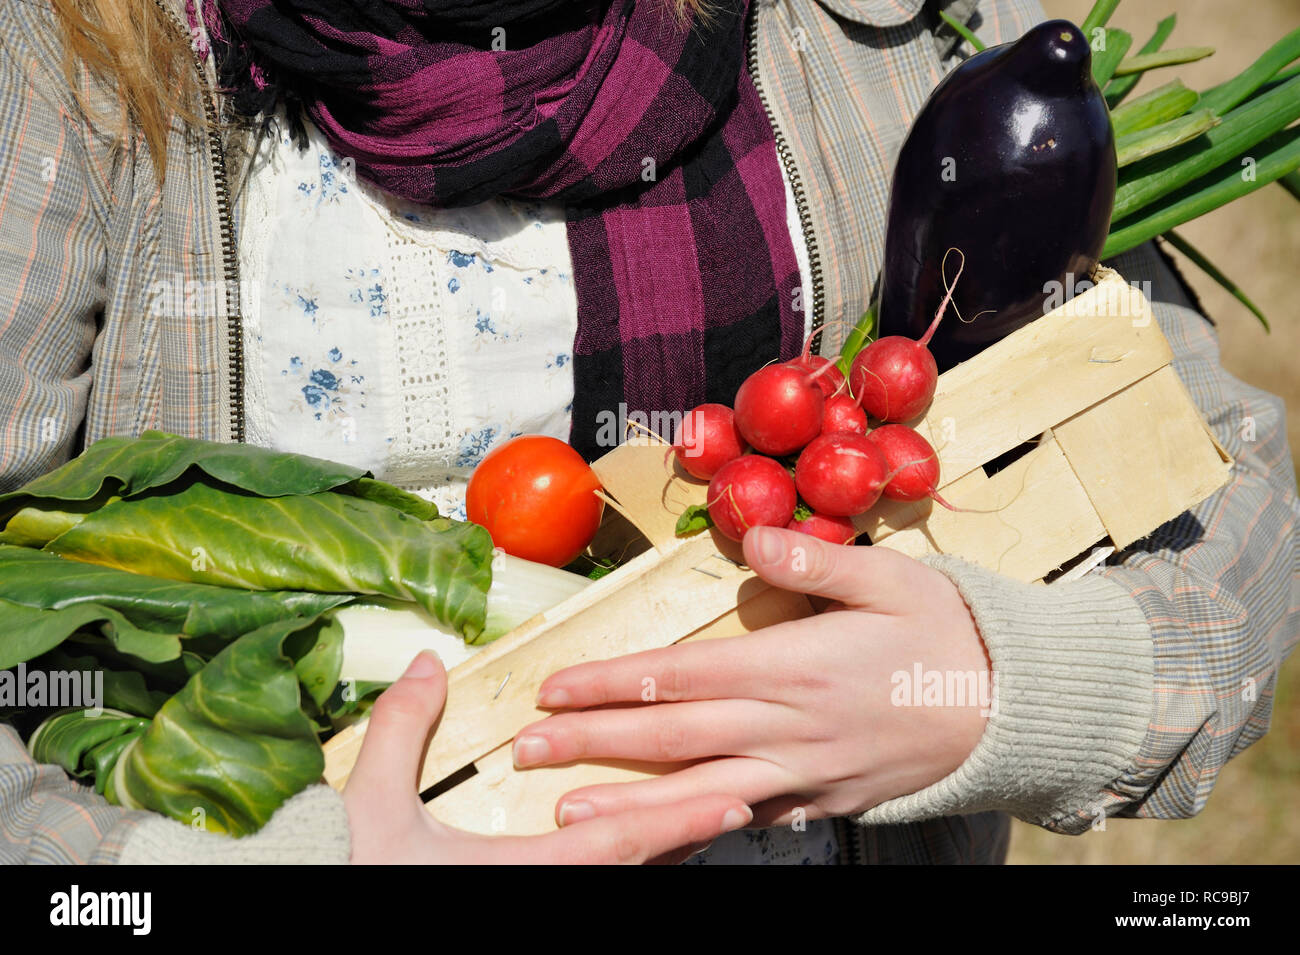 Junge Frau mit Gemüsekorb im Arm - junges Gemüse | junge Frauen mit Gemüse Warenkorb Stockfoto